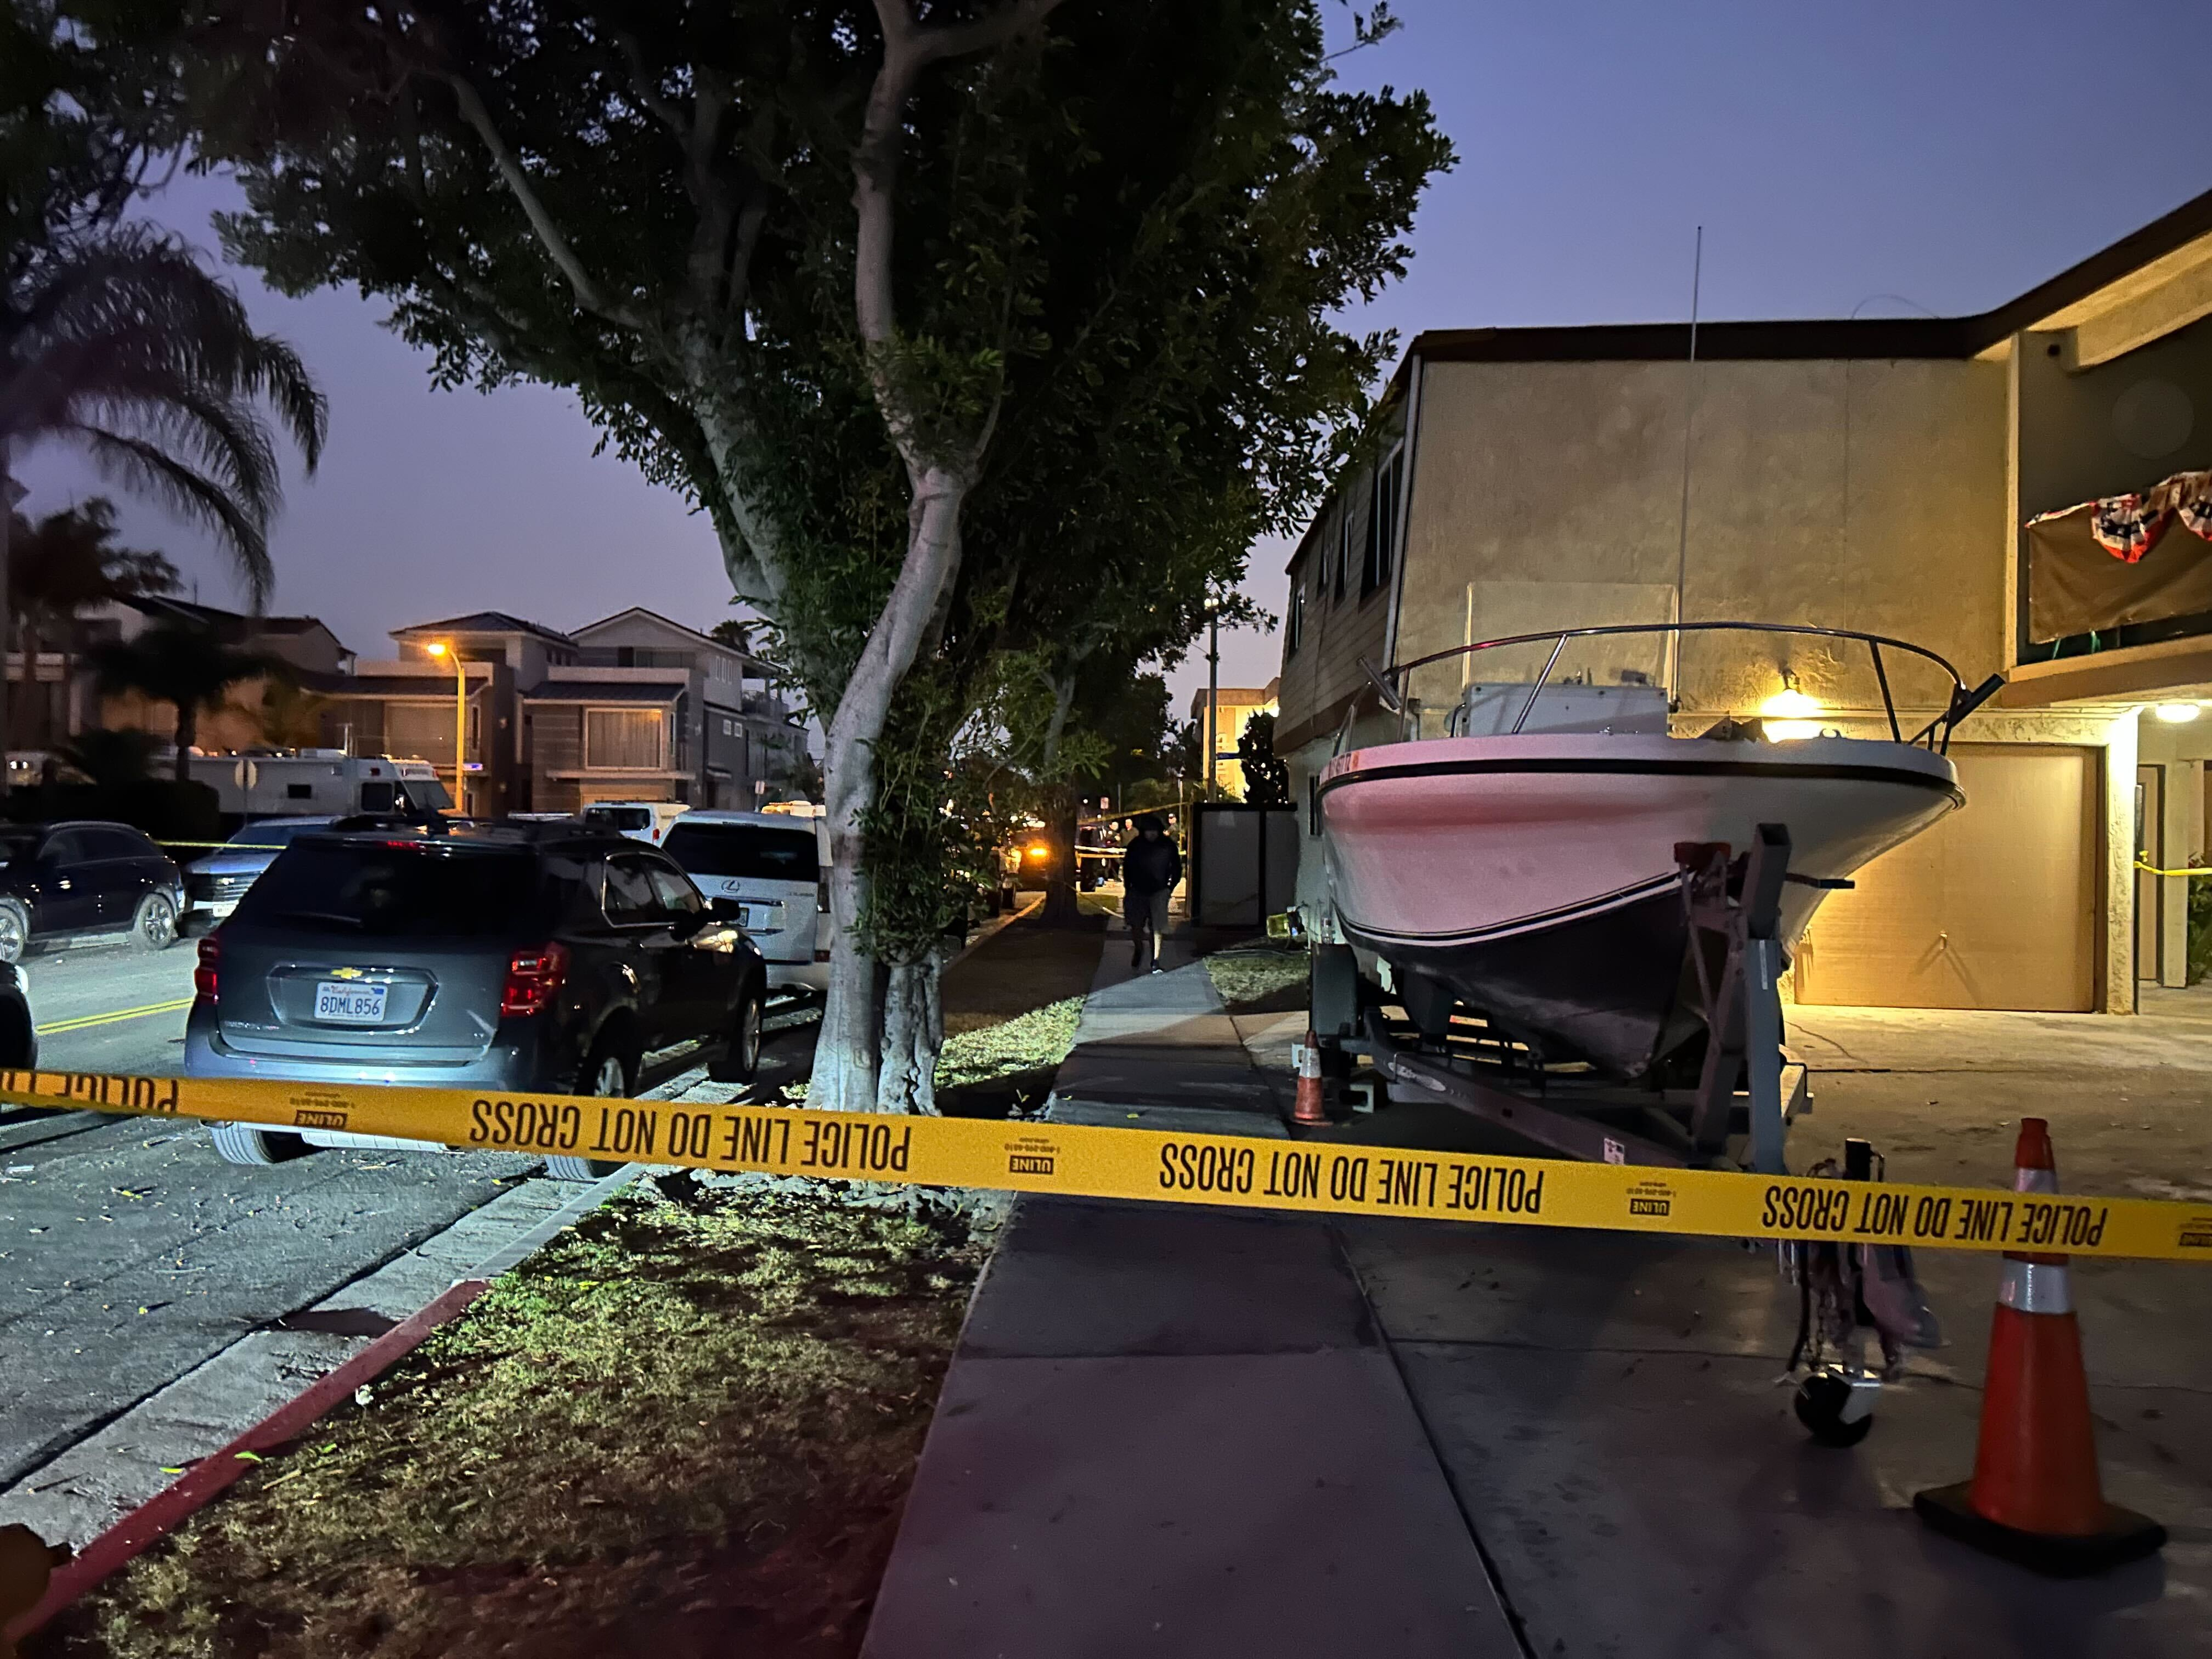 2 killed, 3 injured in Huntington Beach attack; suspect in custody